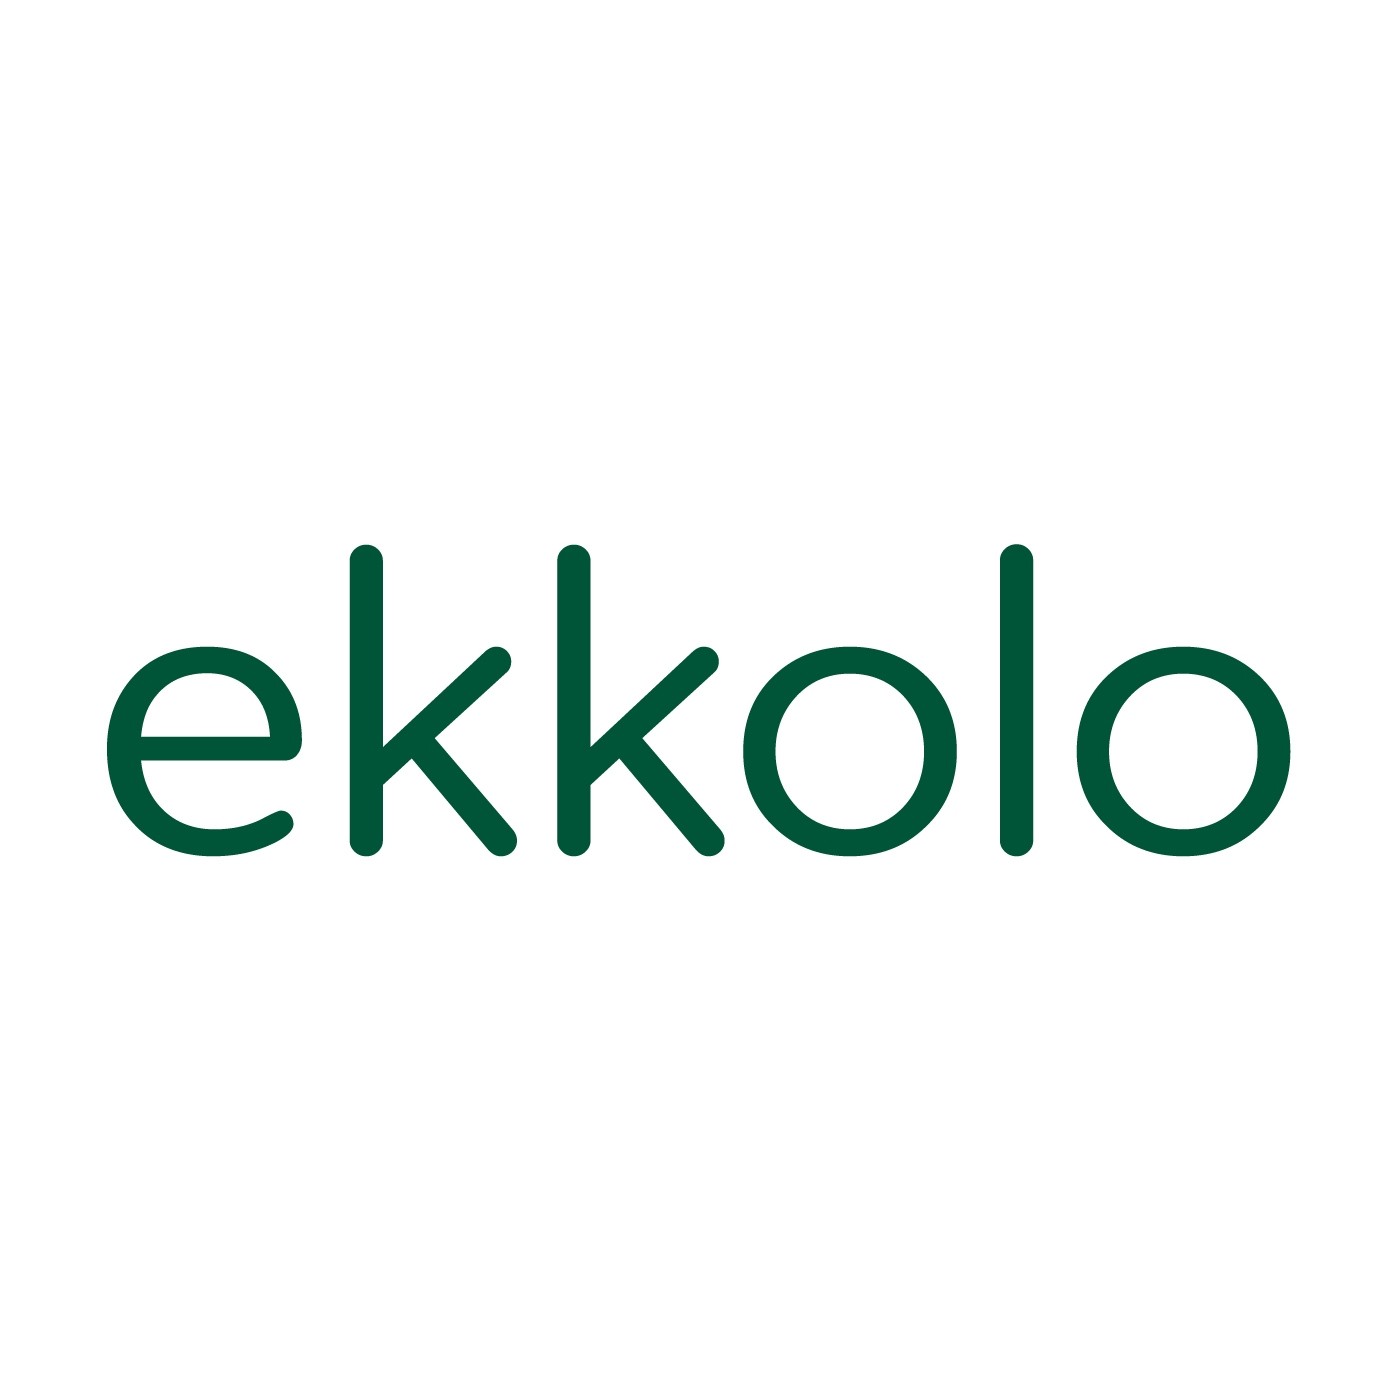 Annuaire Ekkolo